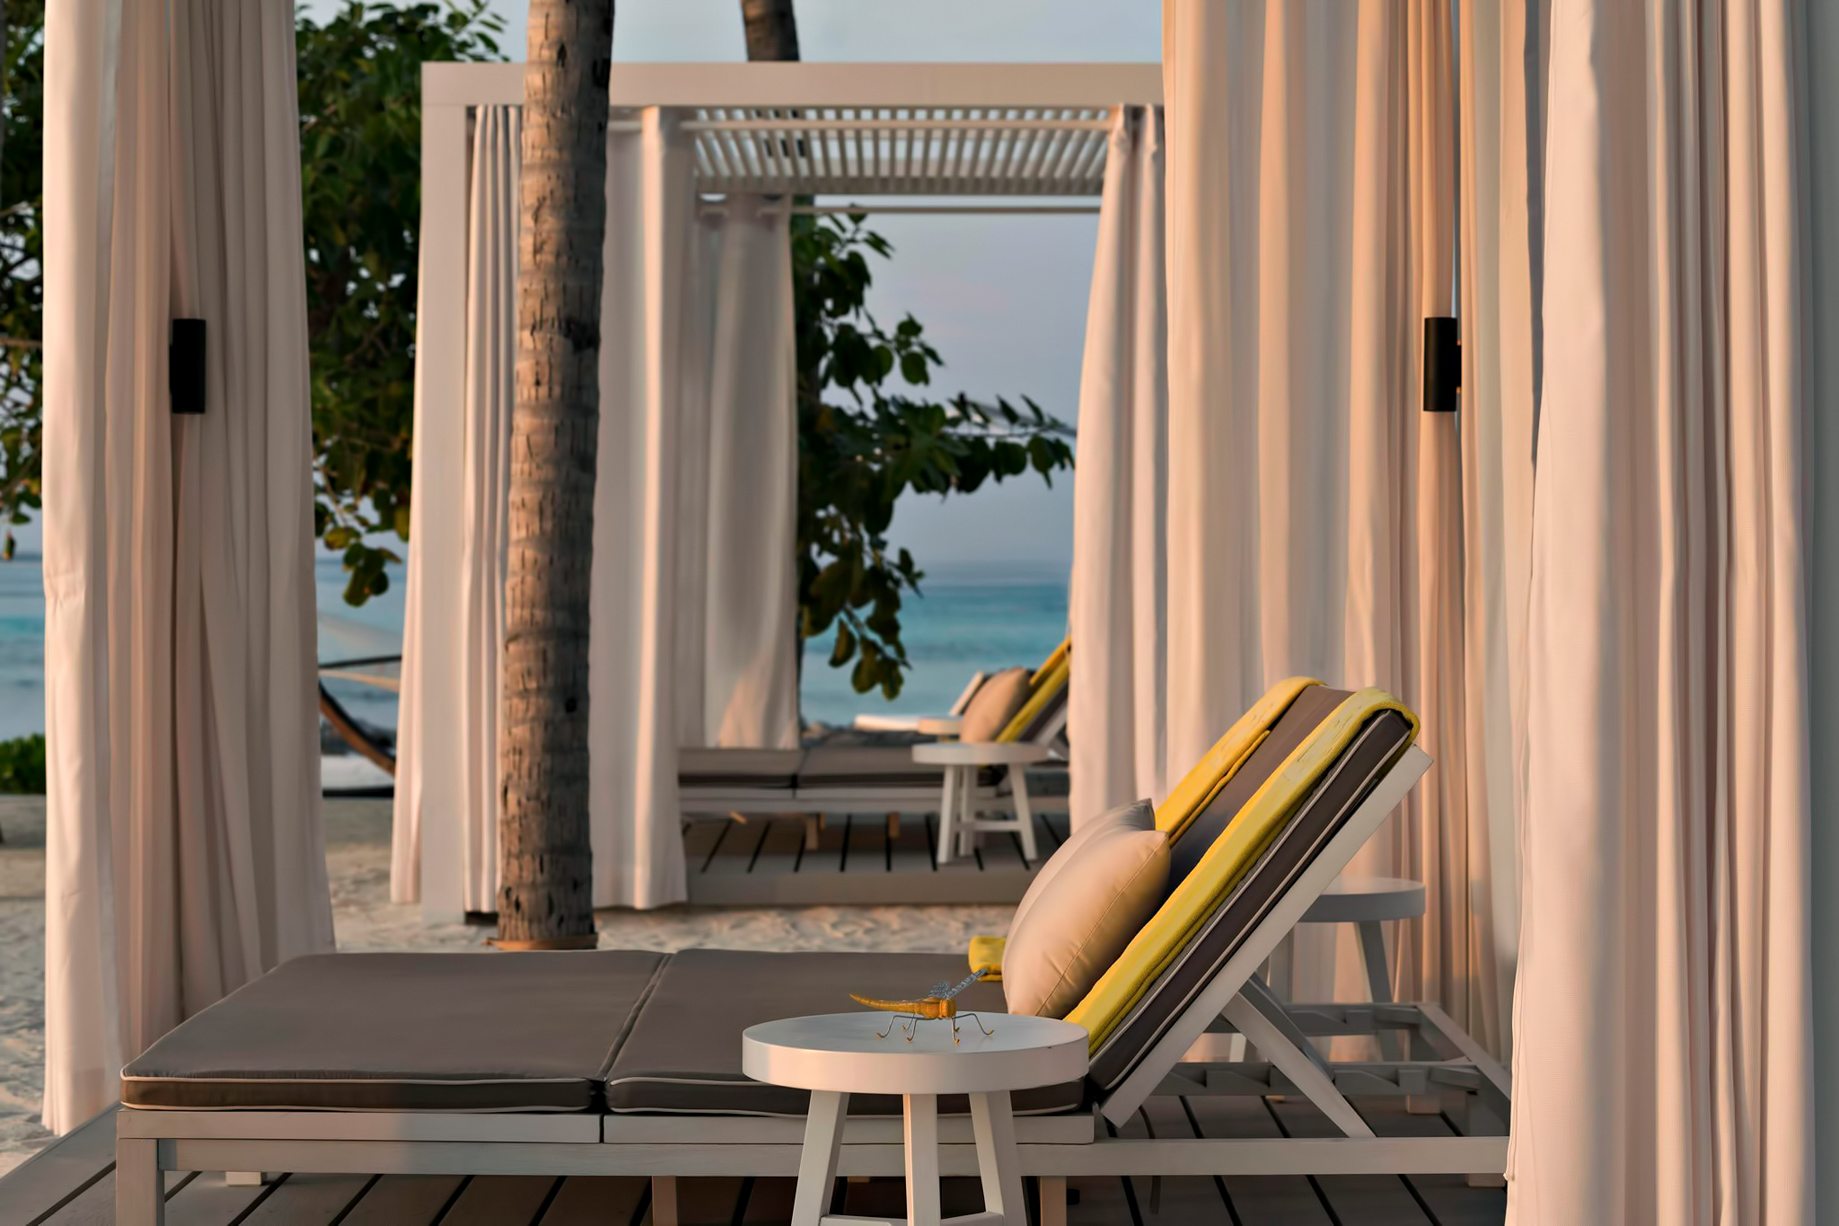 Cheval Blanc Randheli Resort - Noonu Atoll, Maldives - Beach Club Lounge Chairs Sunset